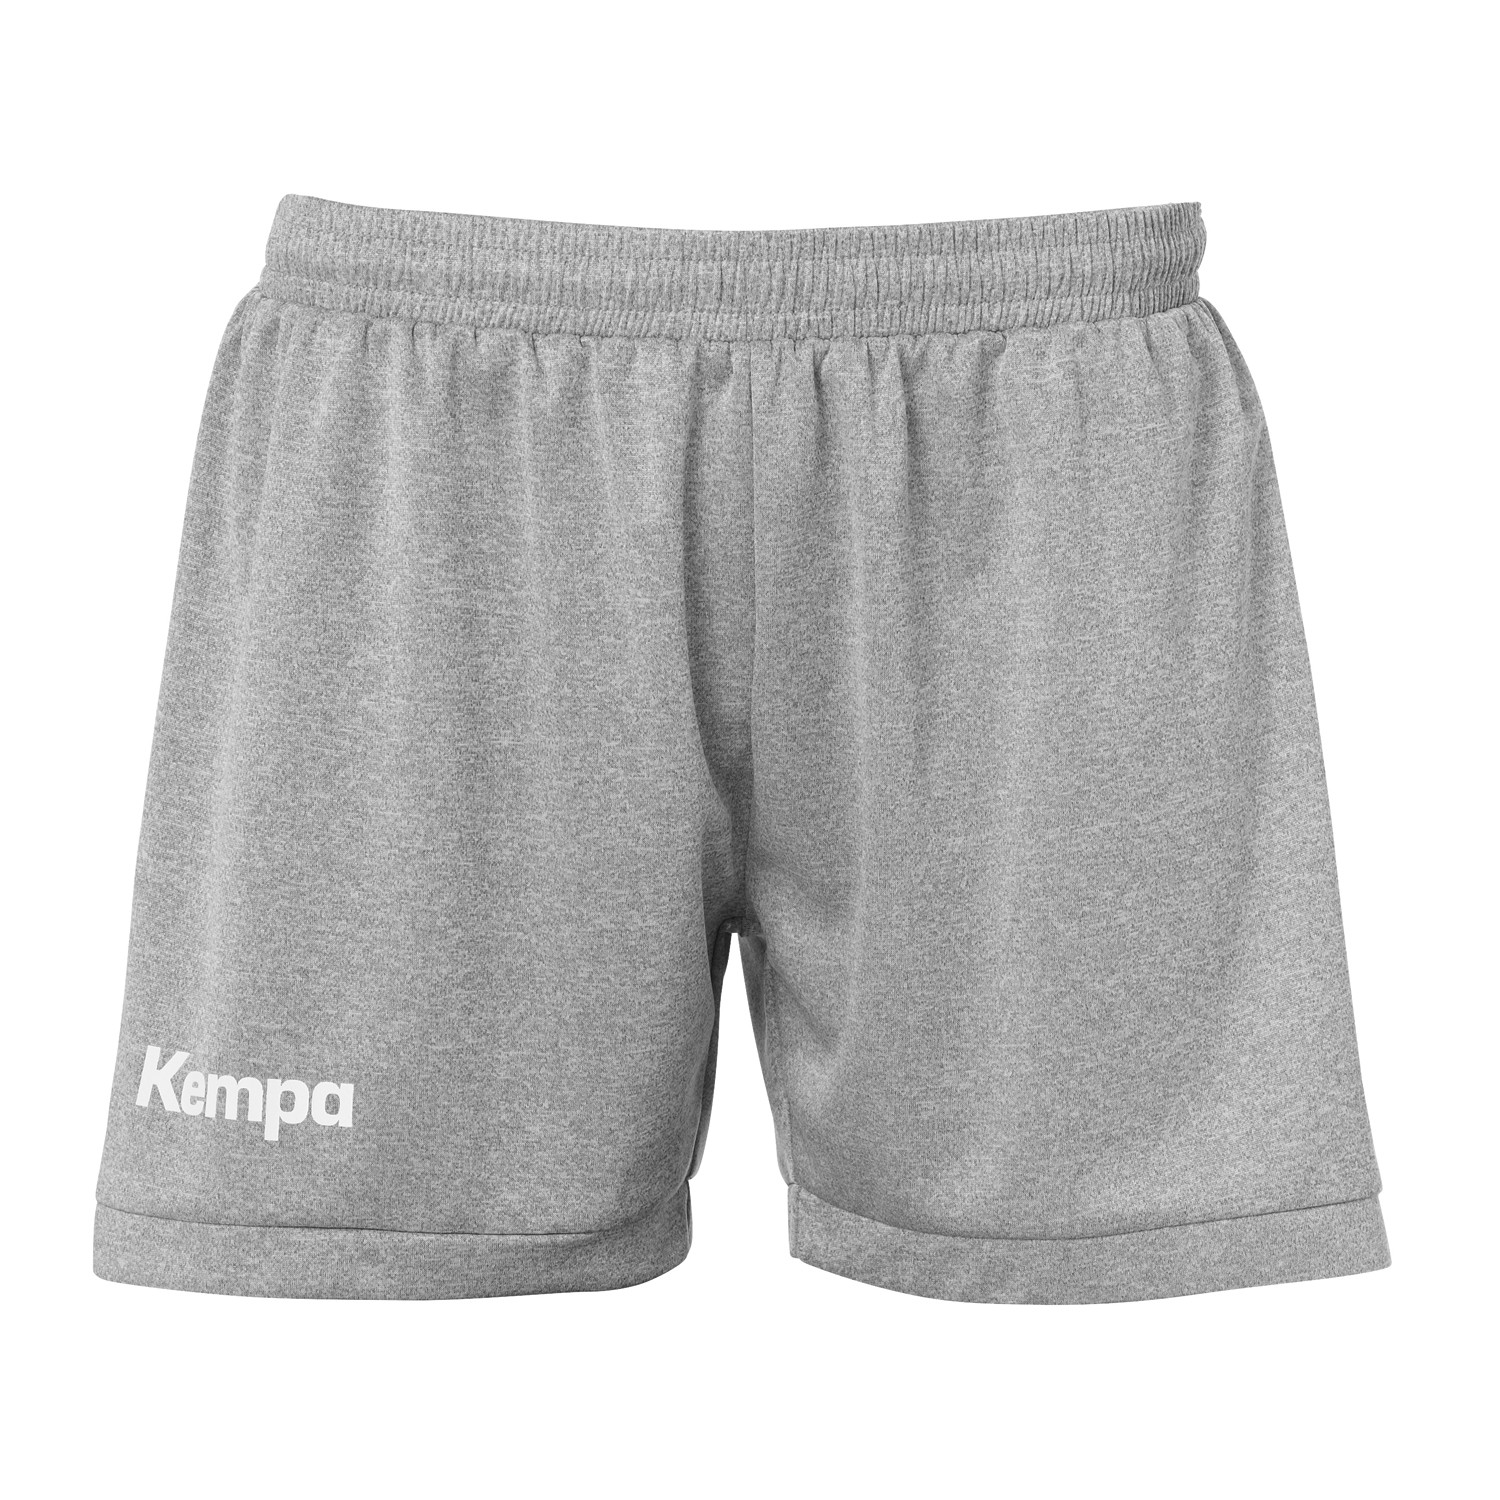 Kempa Core 2.0 Short Damen grau